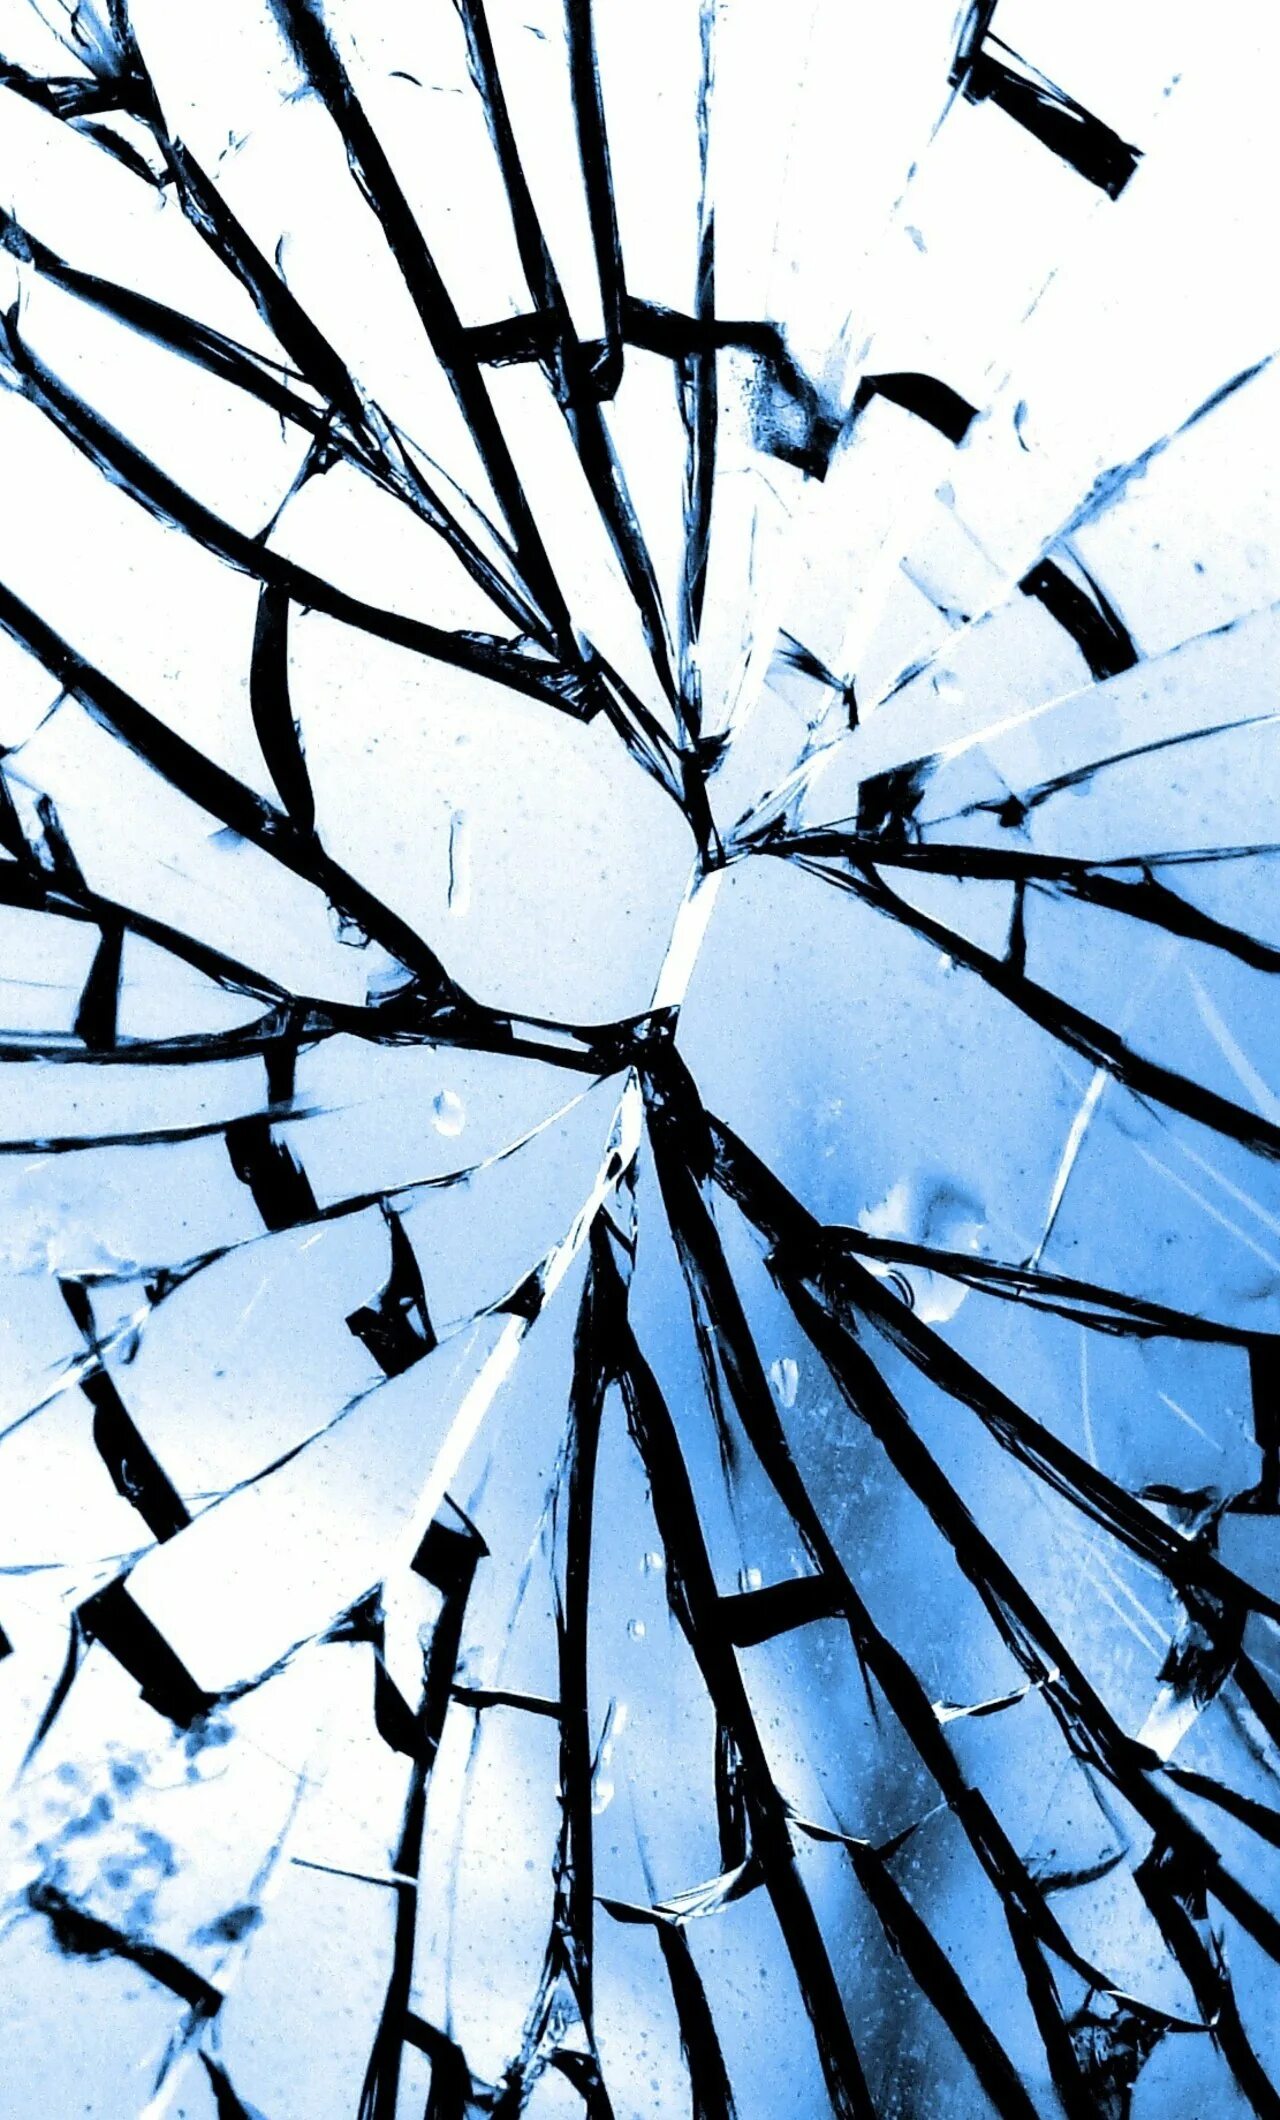 Вид разбитый. Разбитое стекло. Разбитое зеркало. Треснутое стекло. Разбивающееся стекло.